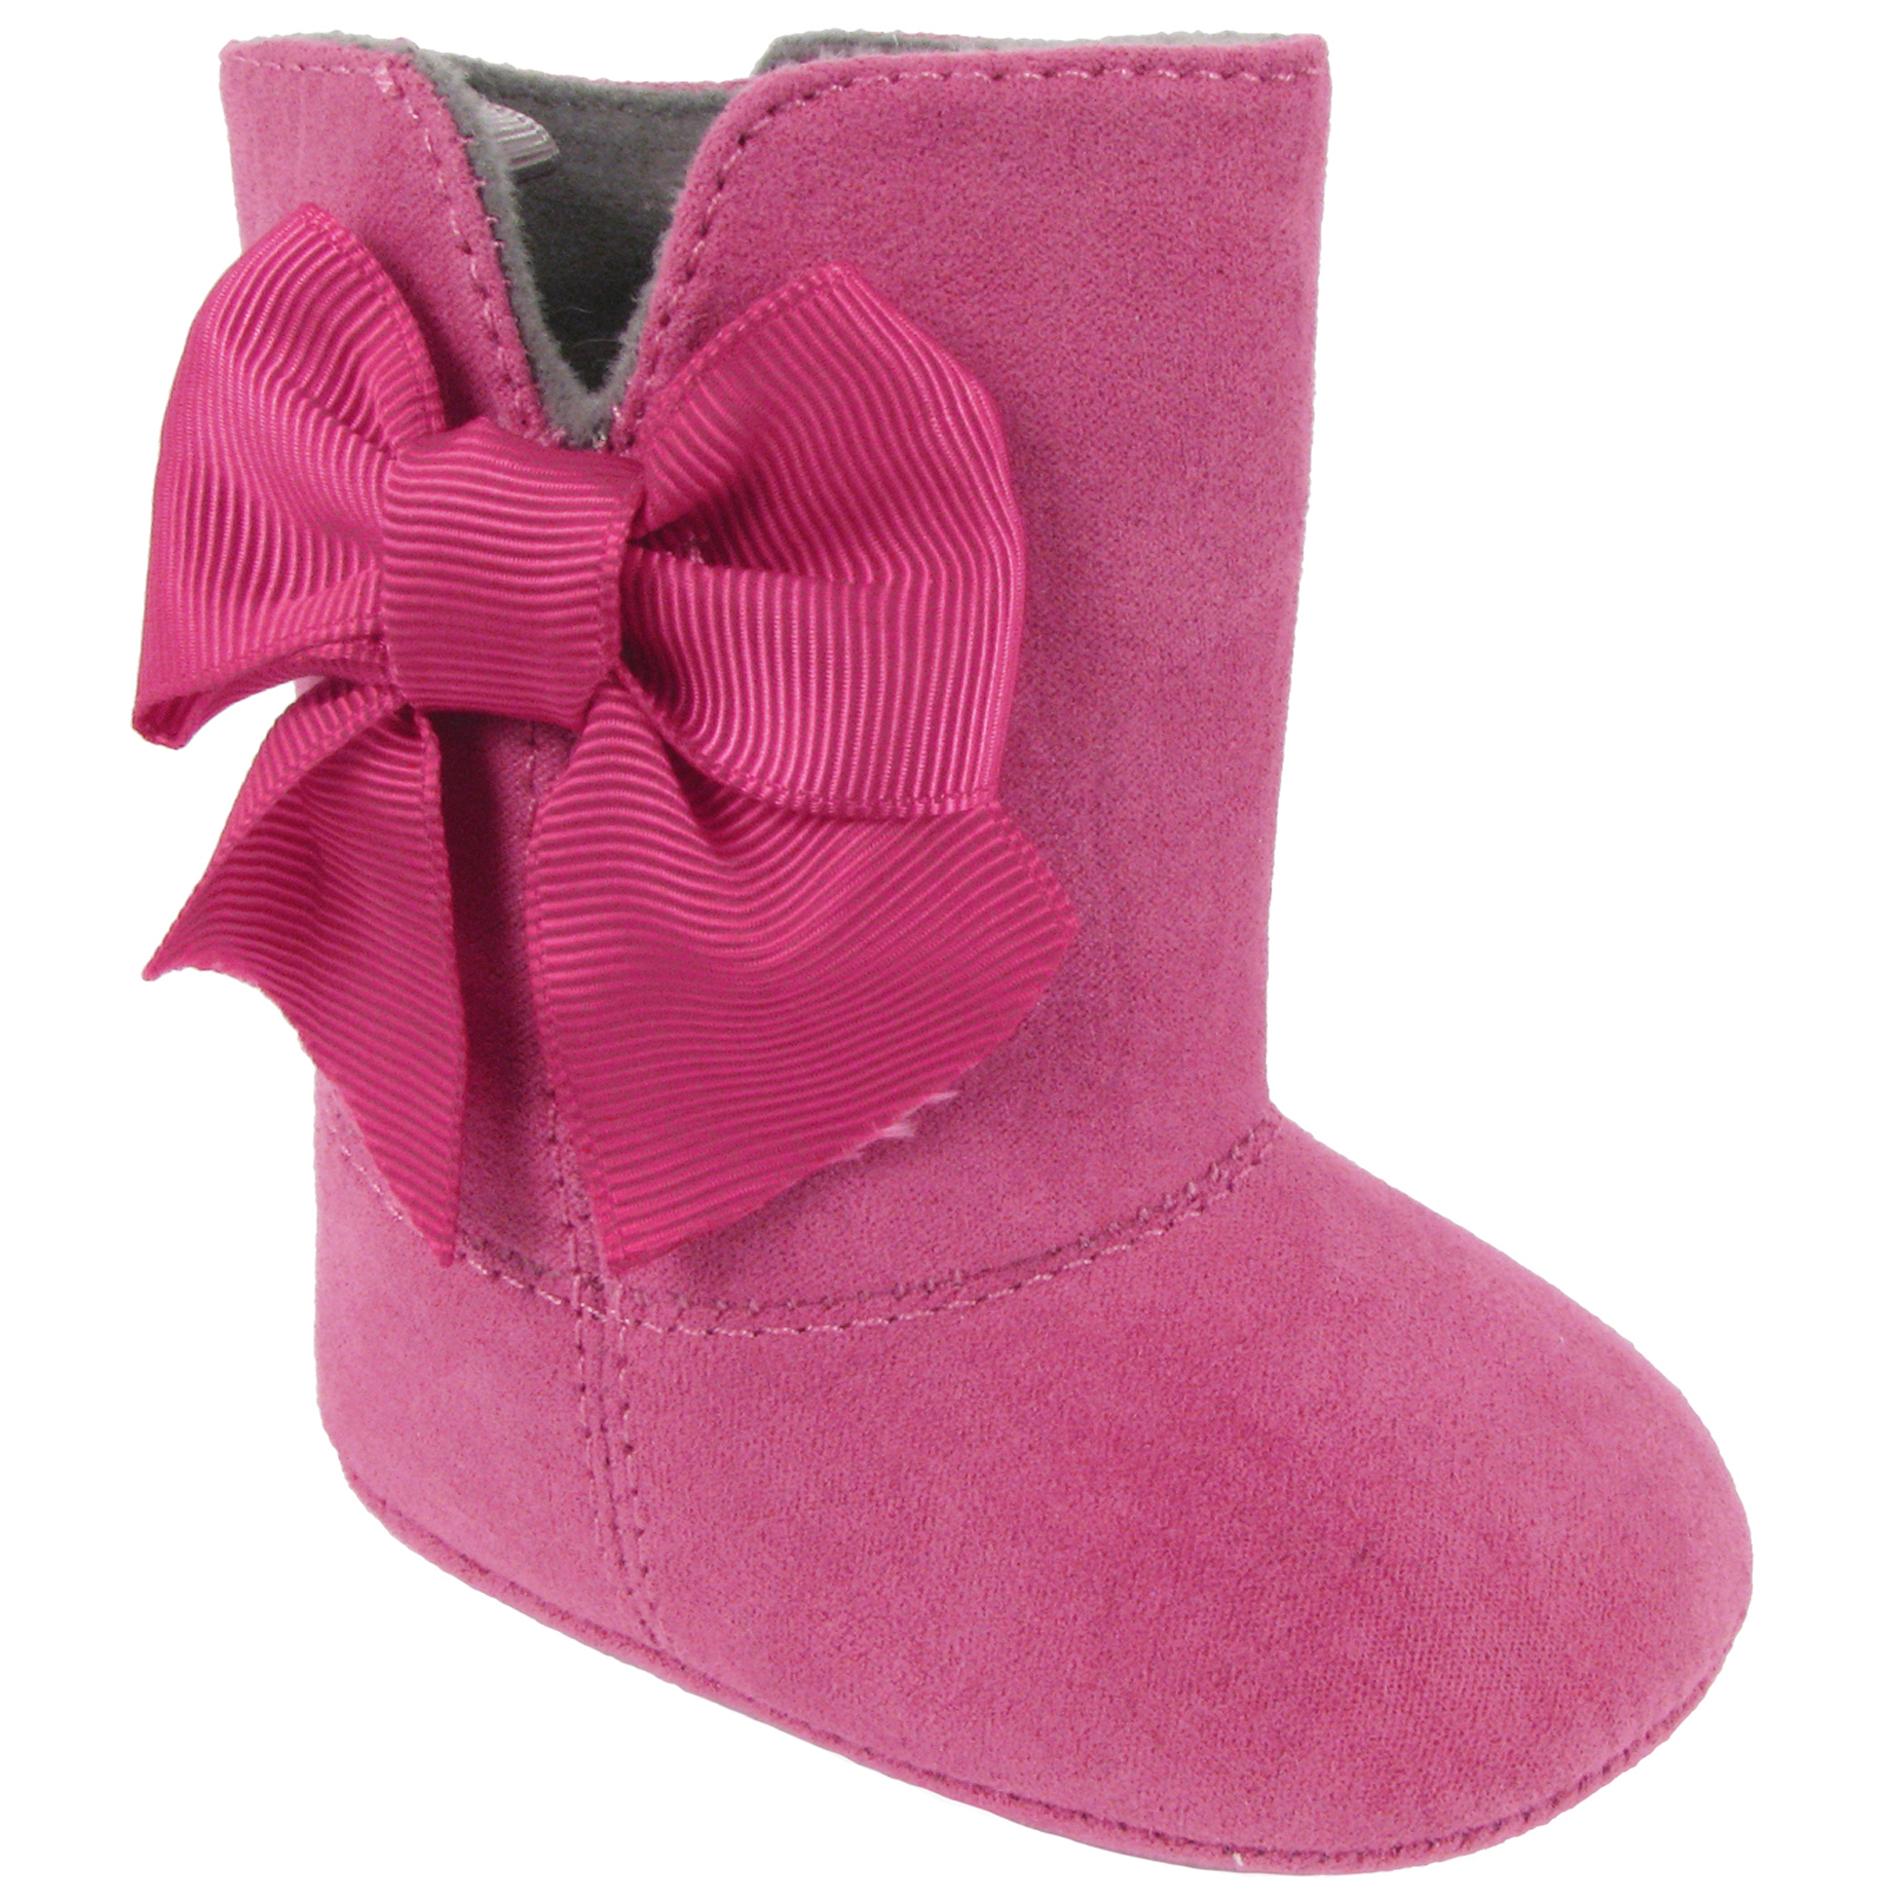 Little Wonders Baby Girl's Pink Winter Boot